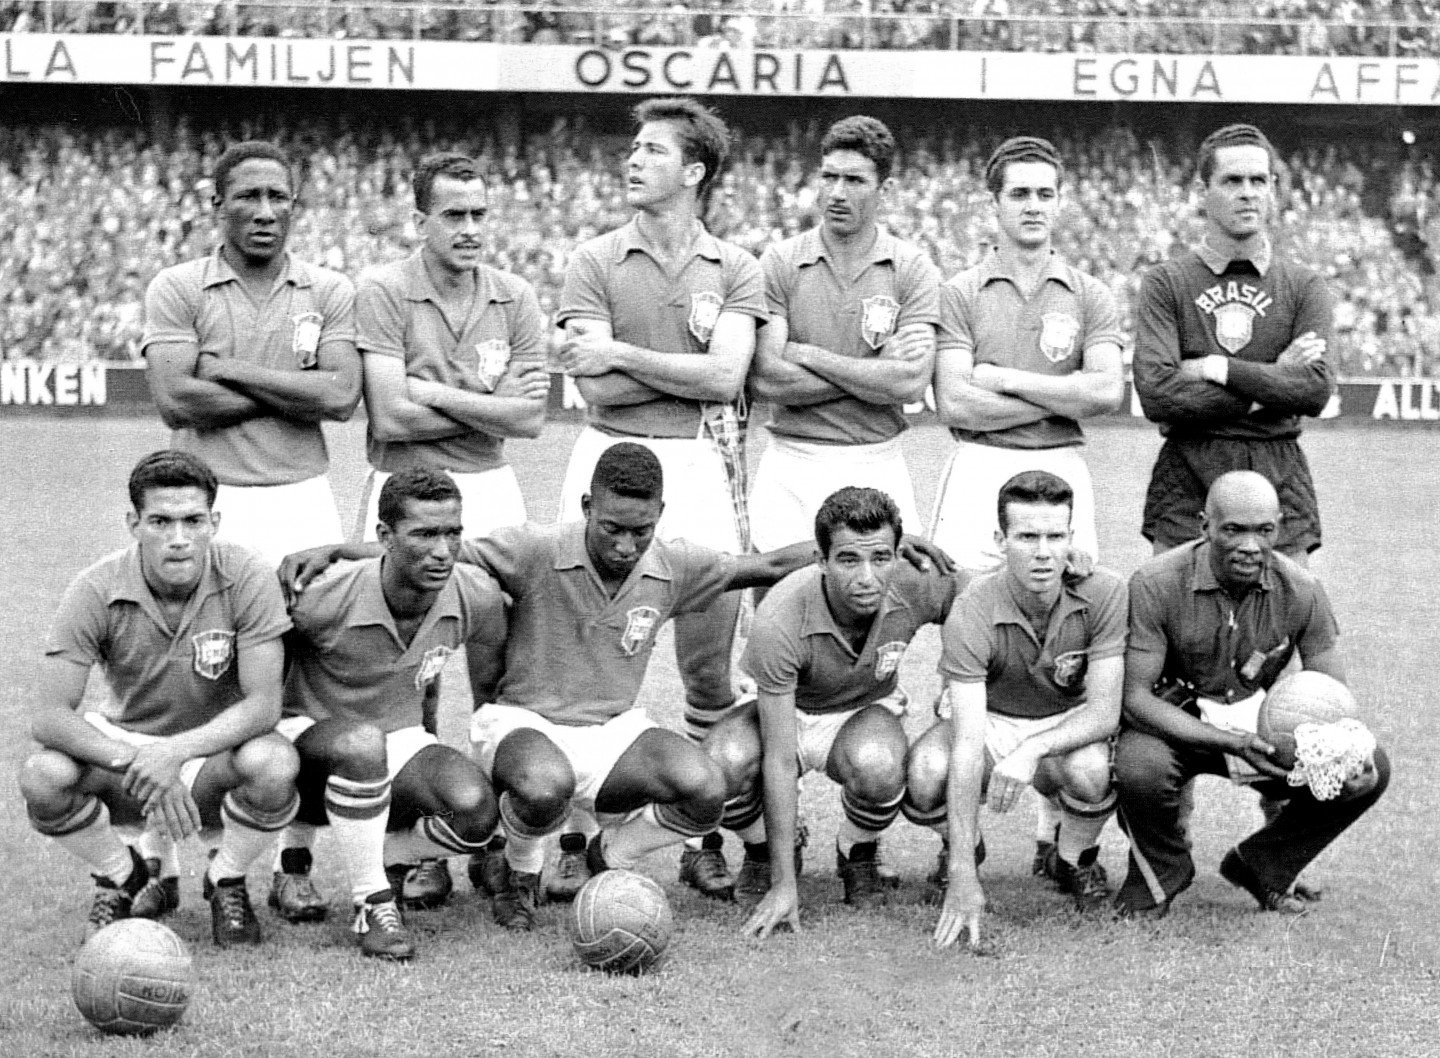 Copa do Mundo 1958 (Suécia) - Estreia: Brasil 3 x 0 Áustria - Gols: Mazzola (2) e Nilton Santos